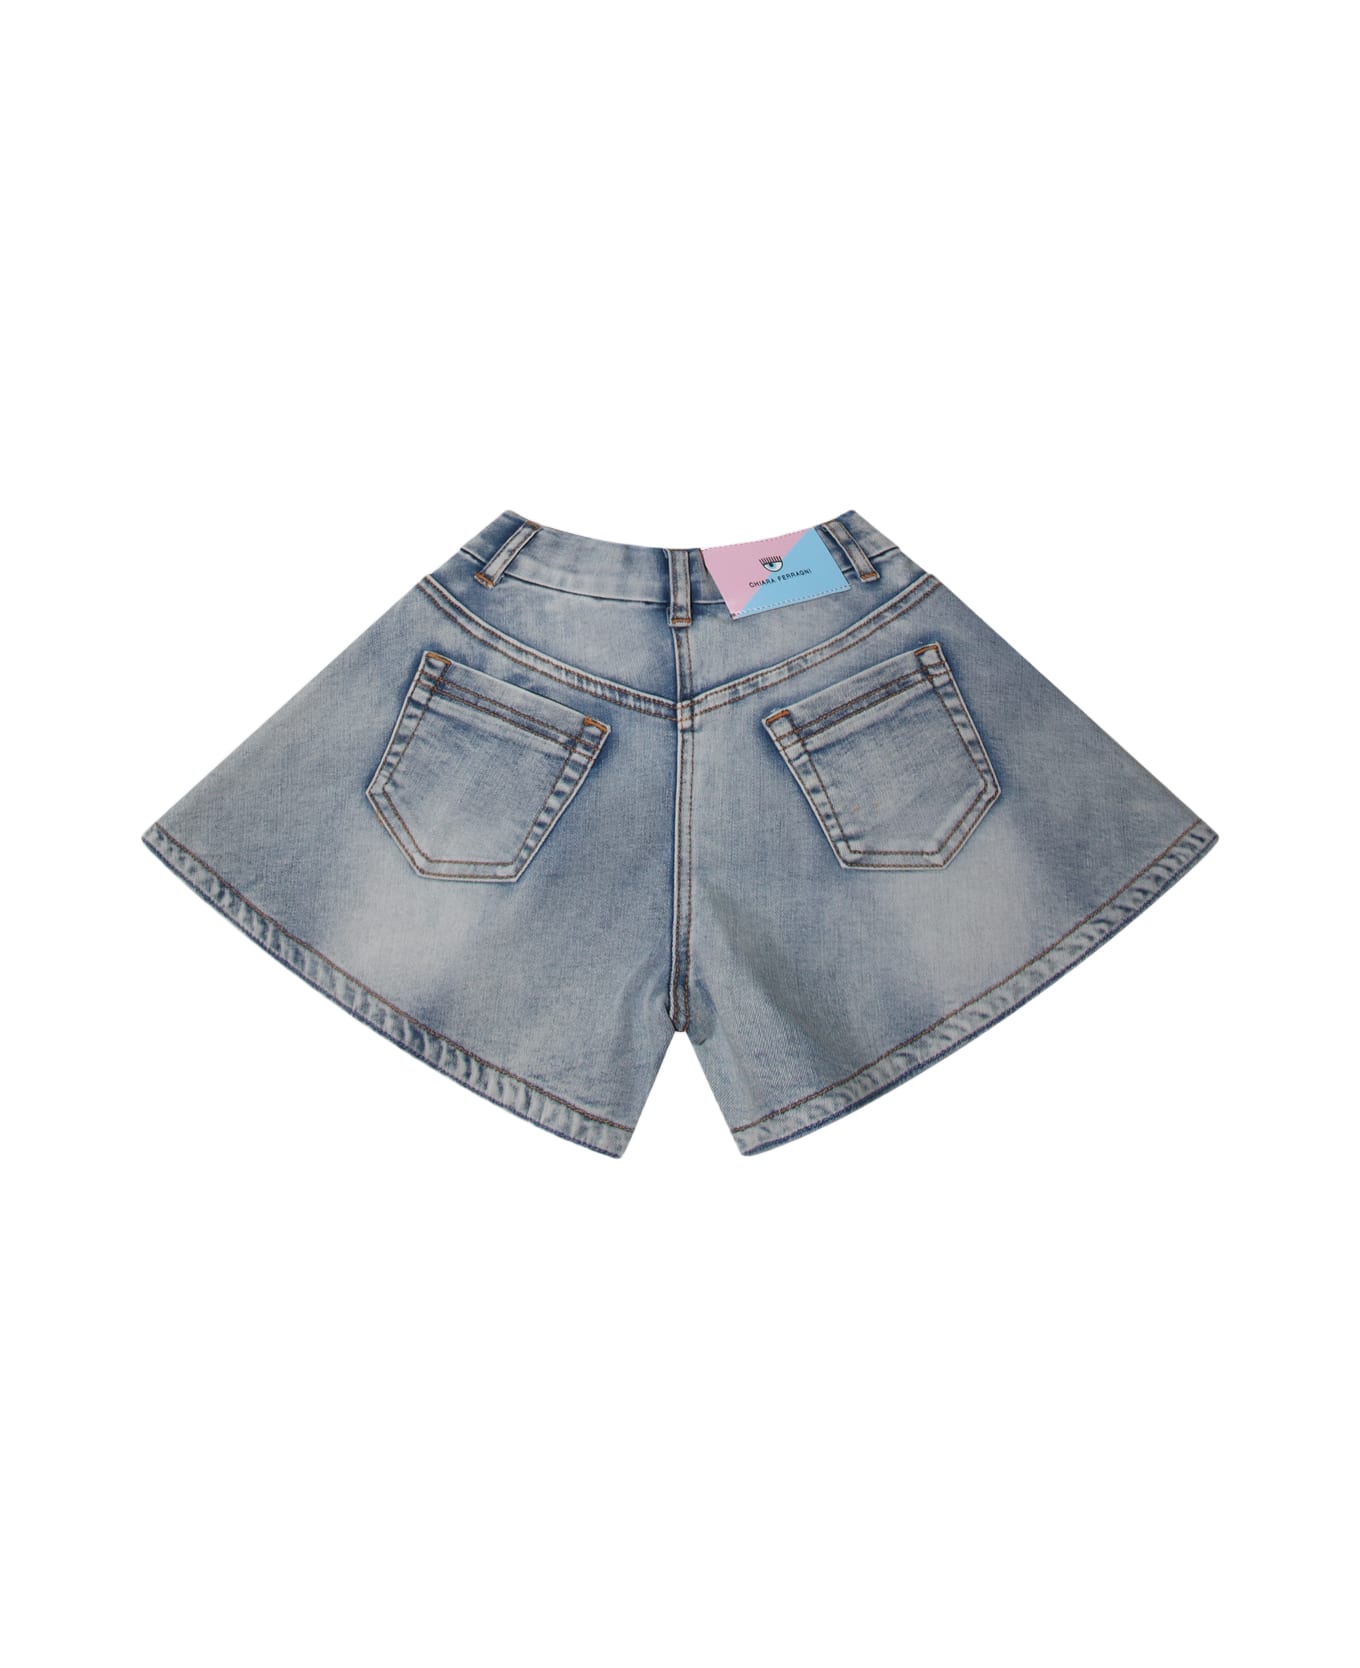 Chiara Ferragni Stone Beach Blue Denim Shorts - Stone Bleach